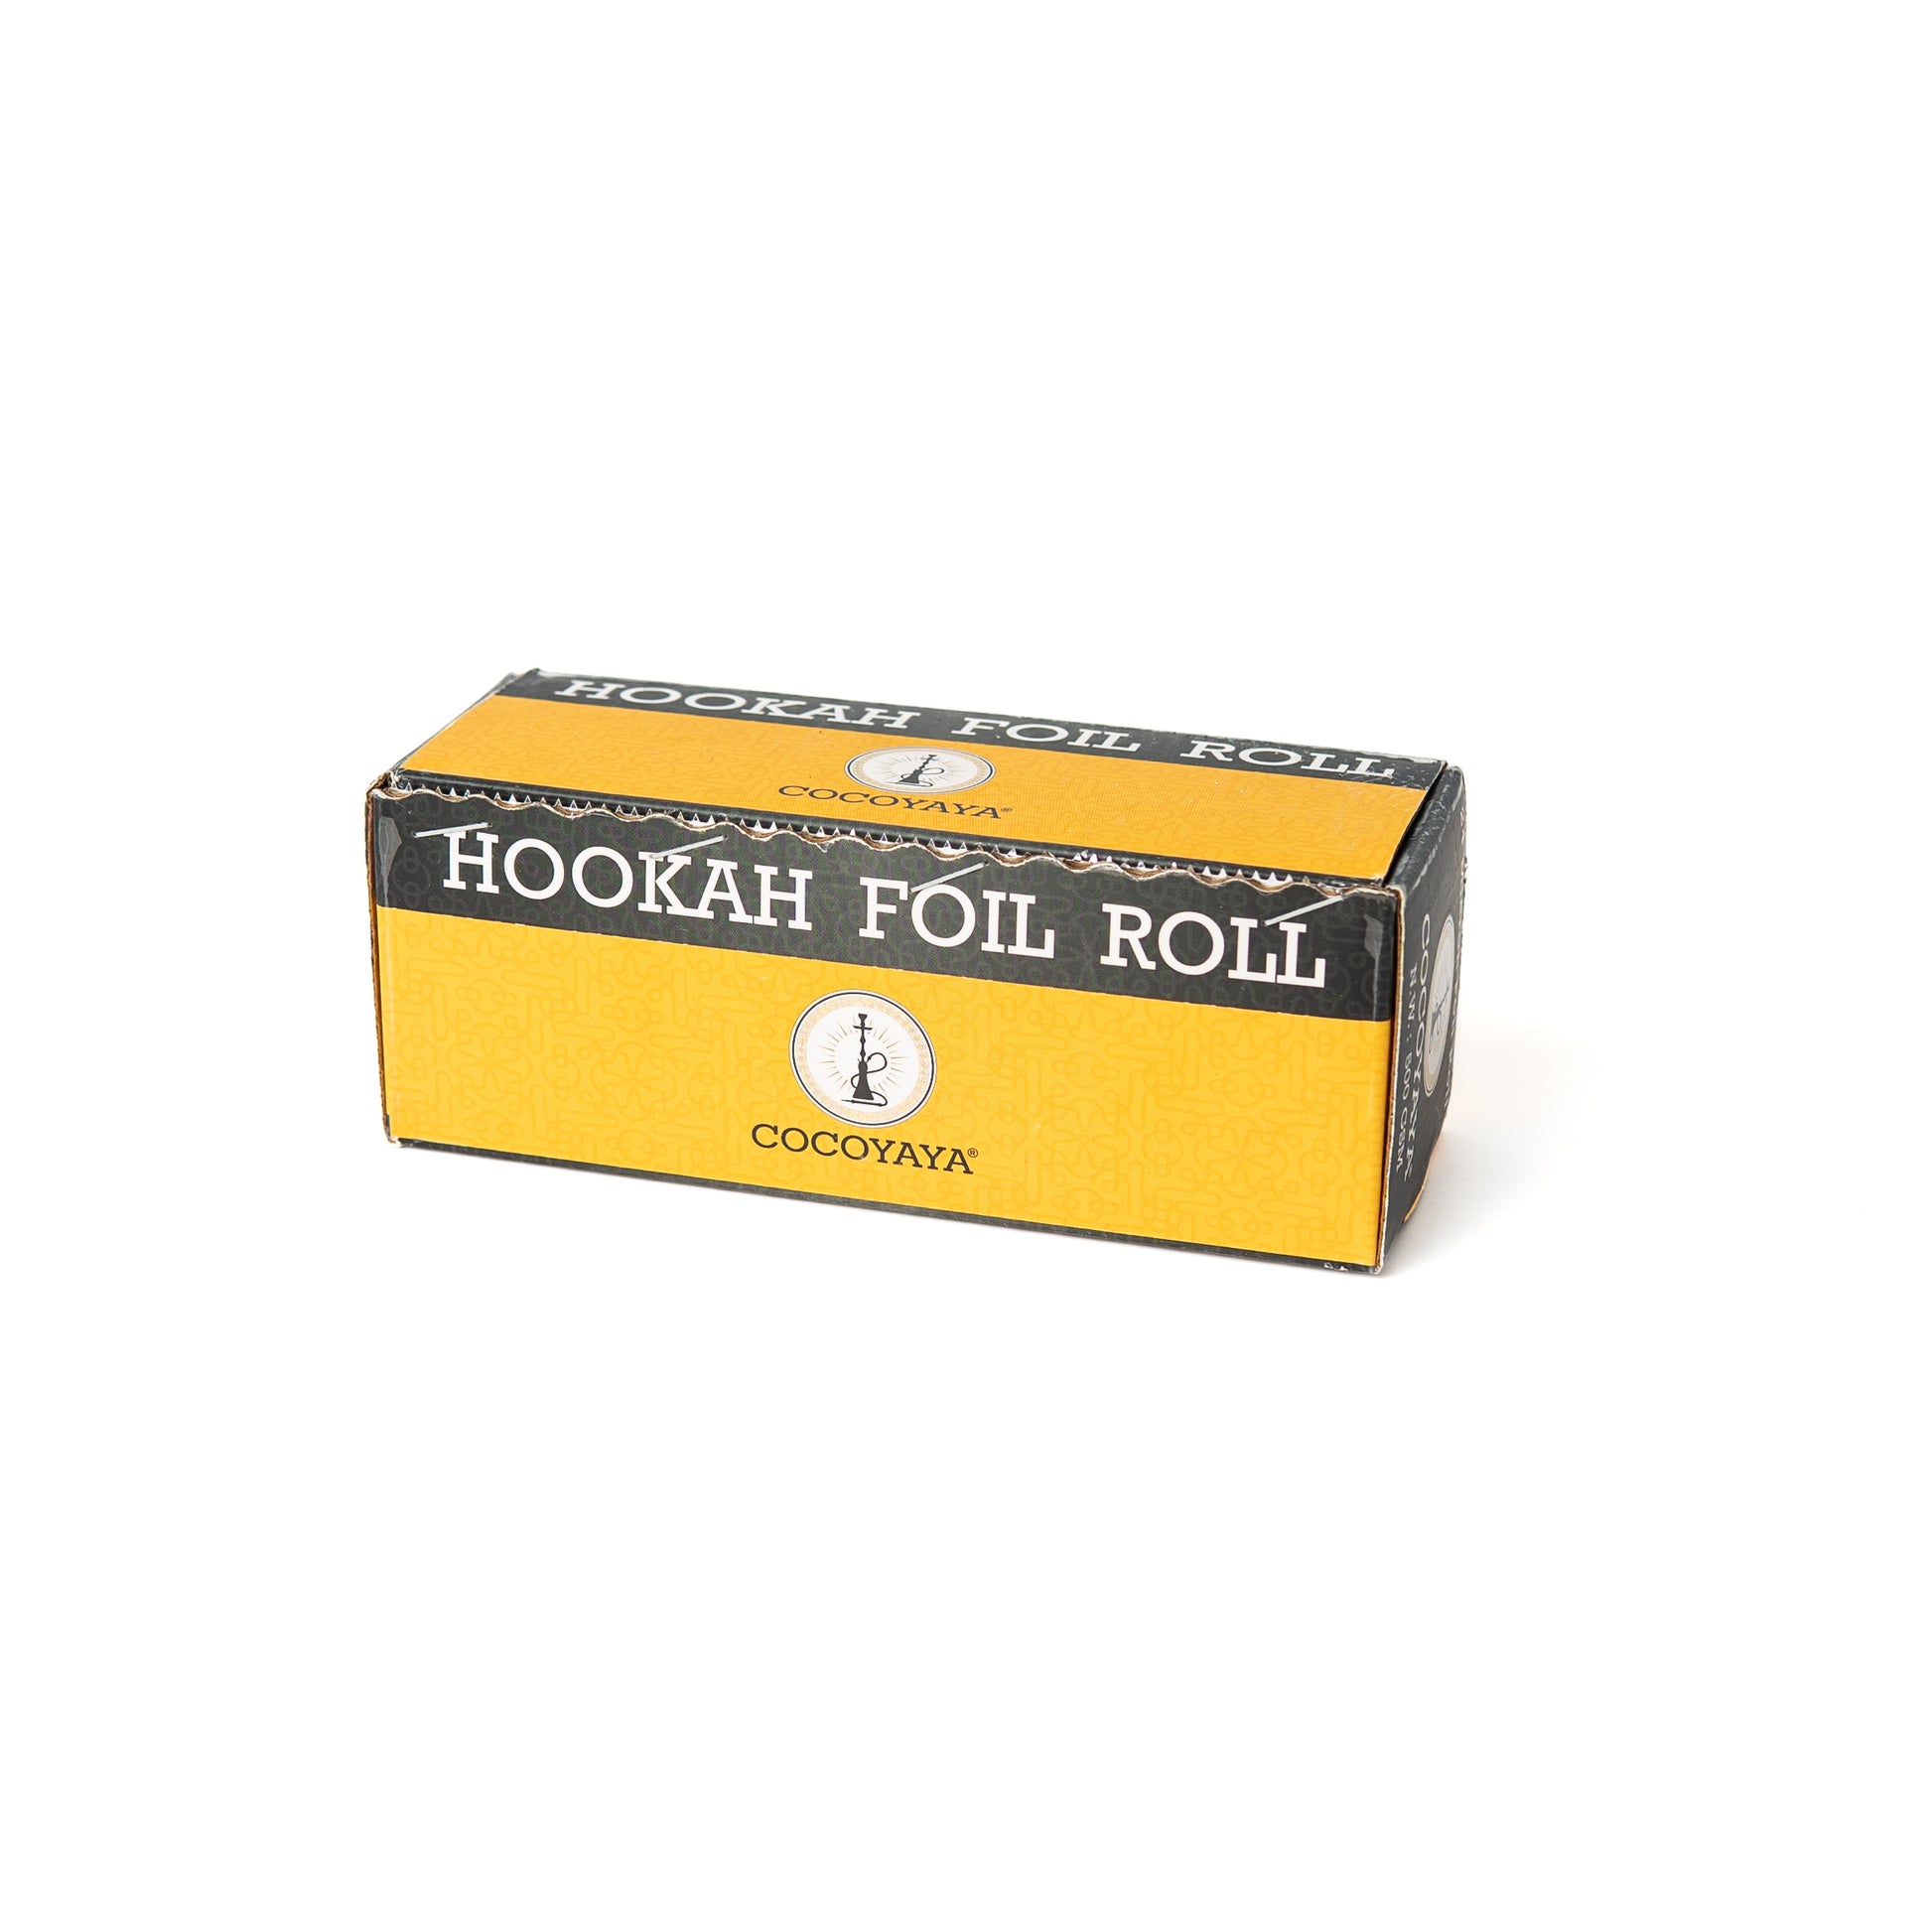 COCOYAYA Aluminium Foil Roll For Hookah - 24 Micron